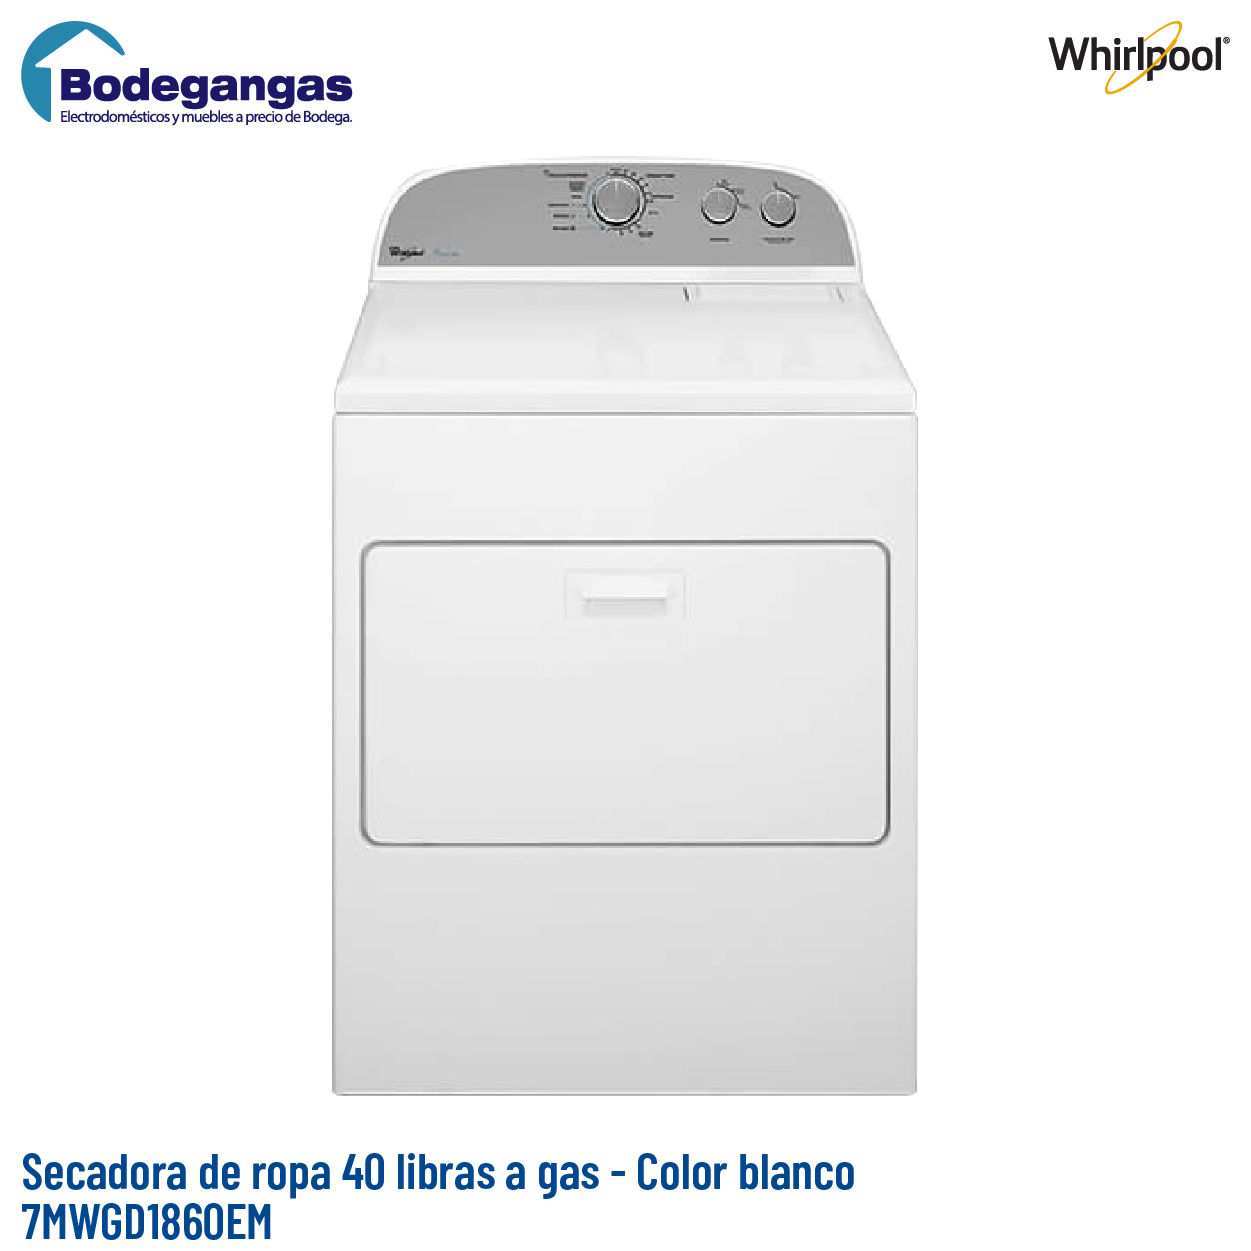 Secadora de ropa Marca WHIRLPOOL 40 libras a Gas 7MWGD1860EM | BodeGangas